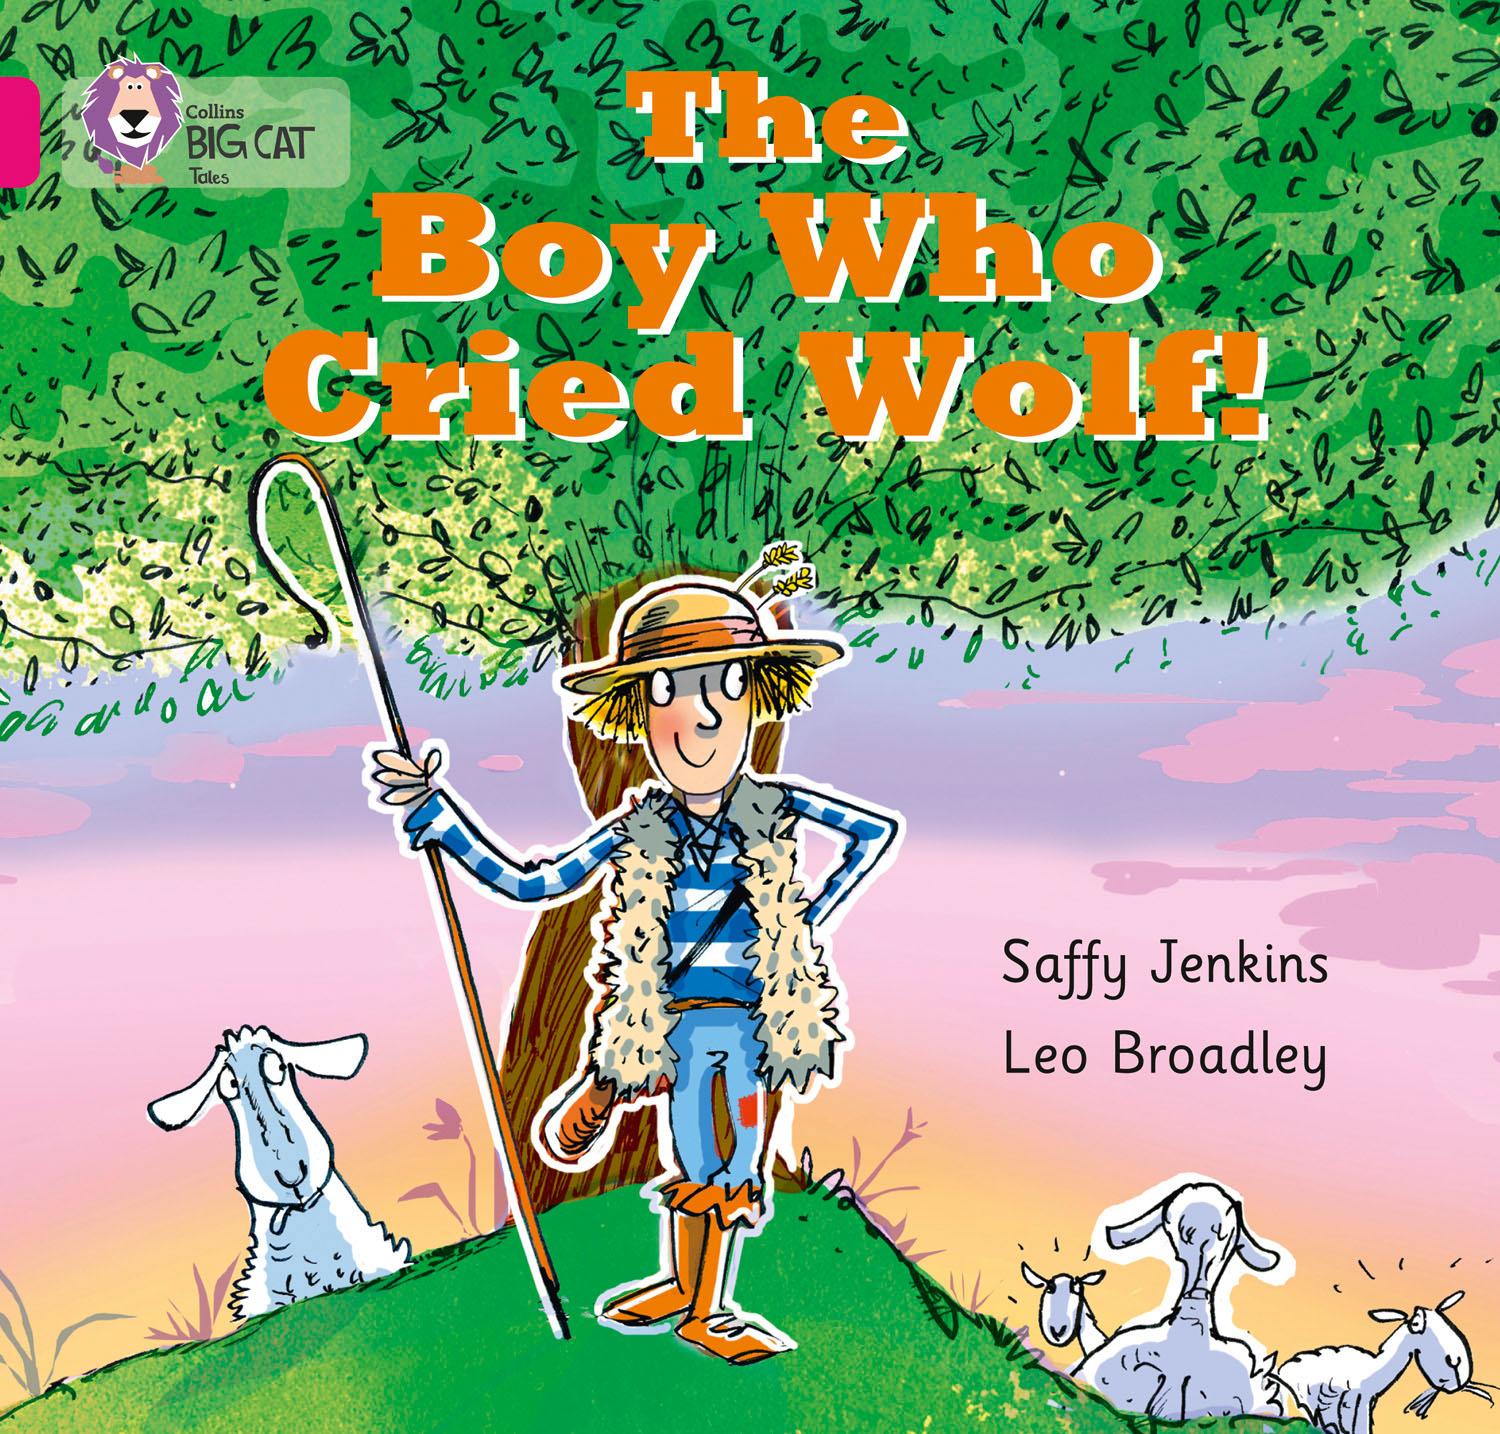 The Boy who Cried Wolf / Band 01b/Pink B / Saffy Jenkins / Taschenbuch / Collins Big Cat / Kartoniert / Broschiert / Englisch / 2013 / HarperCollins Publishers / EAN 9780007512676 - Jenkins, Saffy